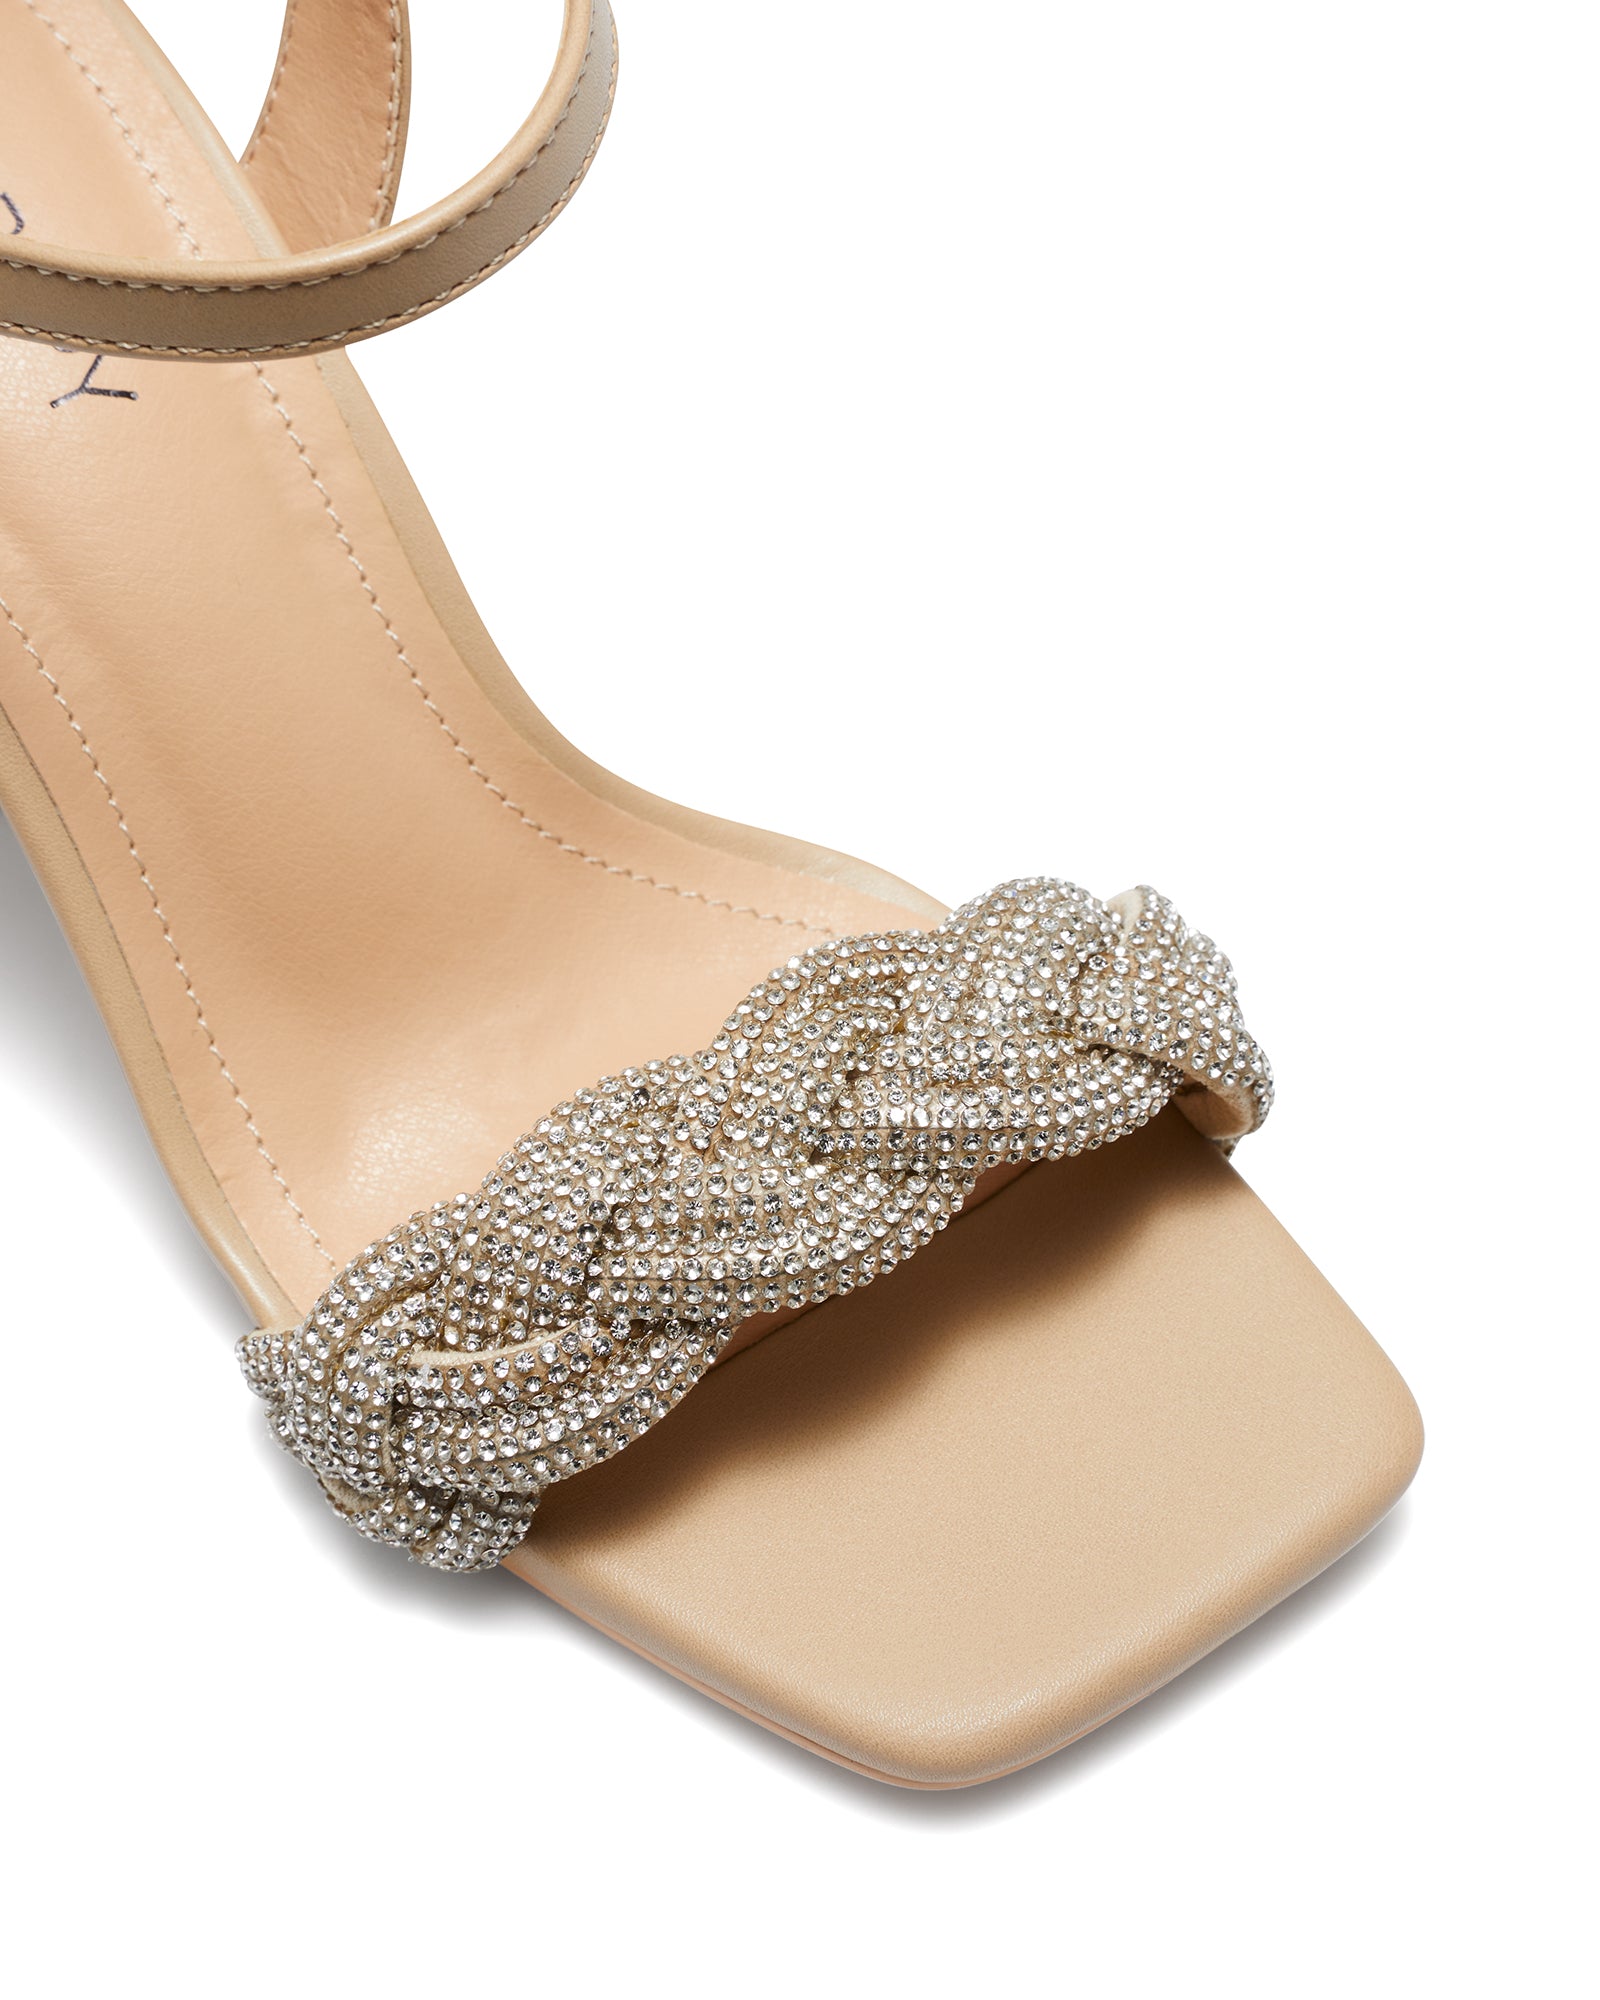 Therapy Shoes Allure Latte | Women's Heels | Sandals | Diamante | Braid